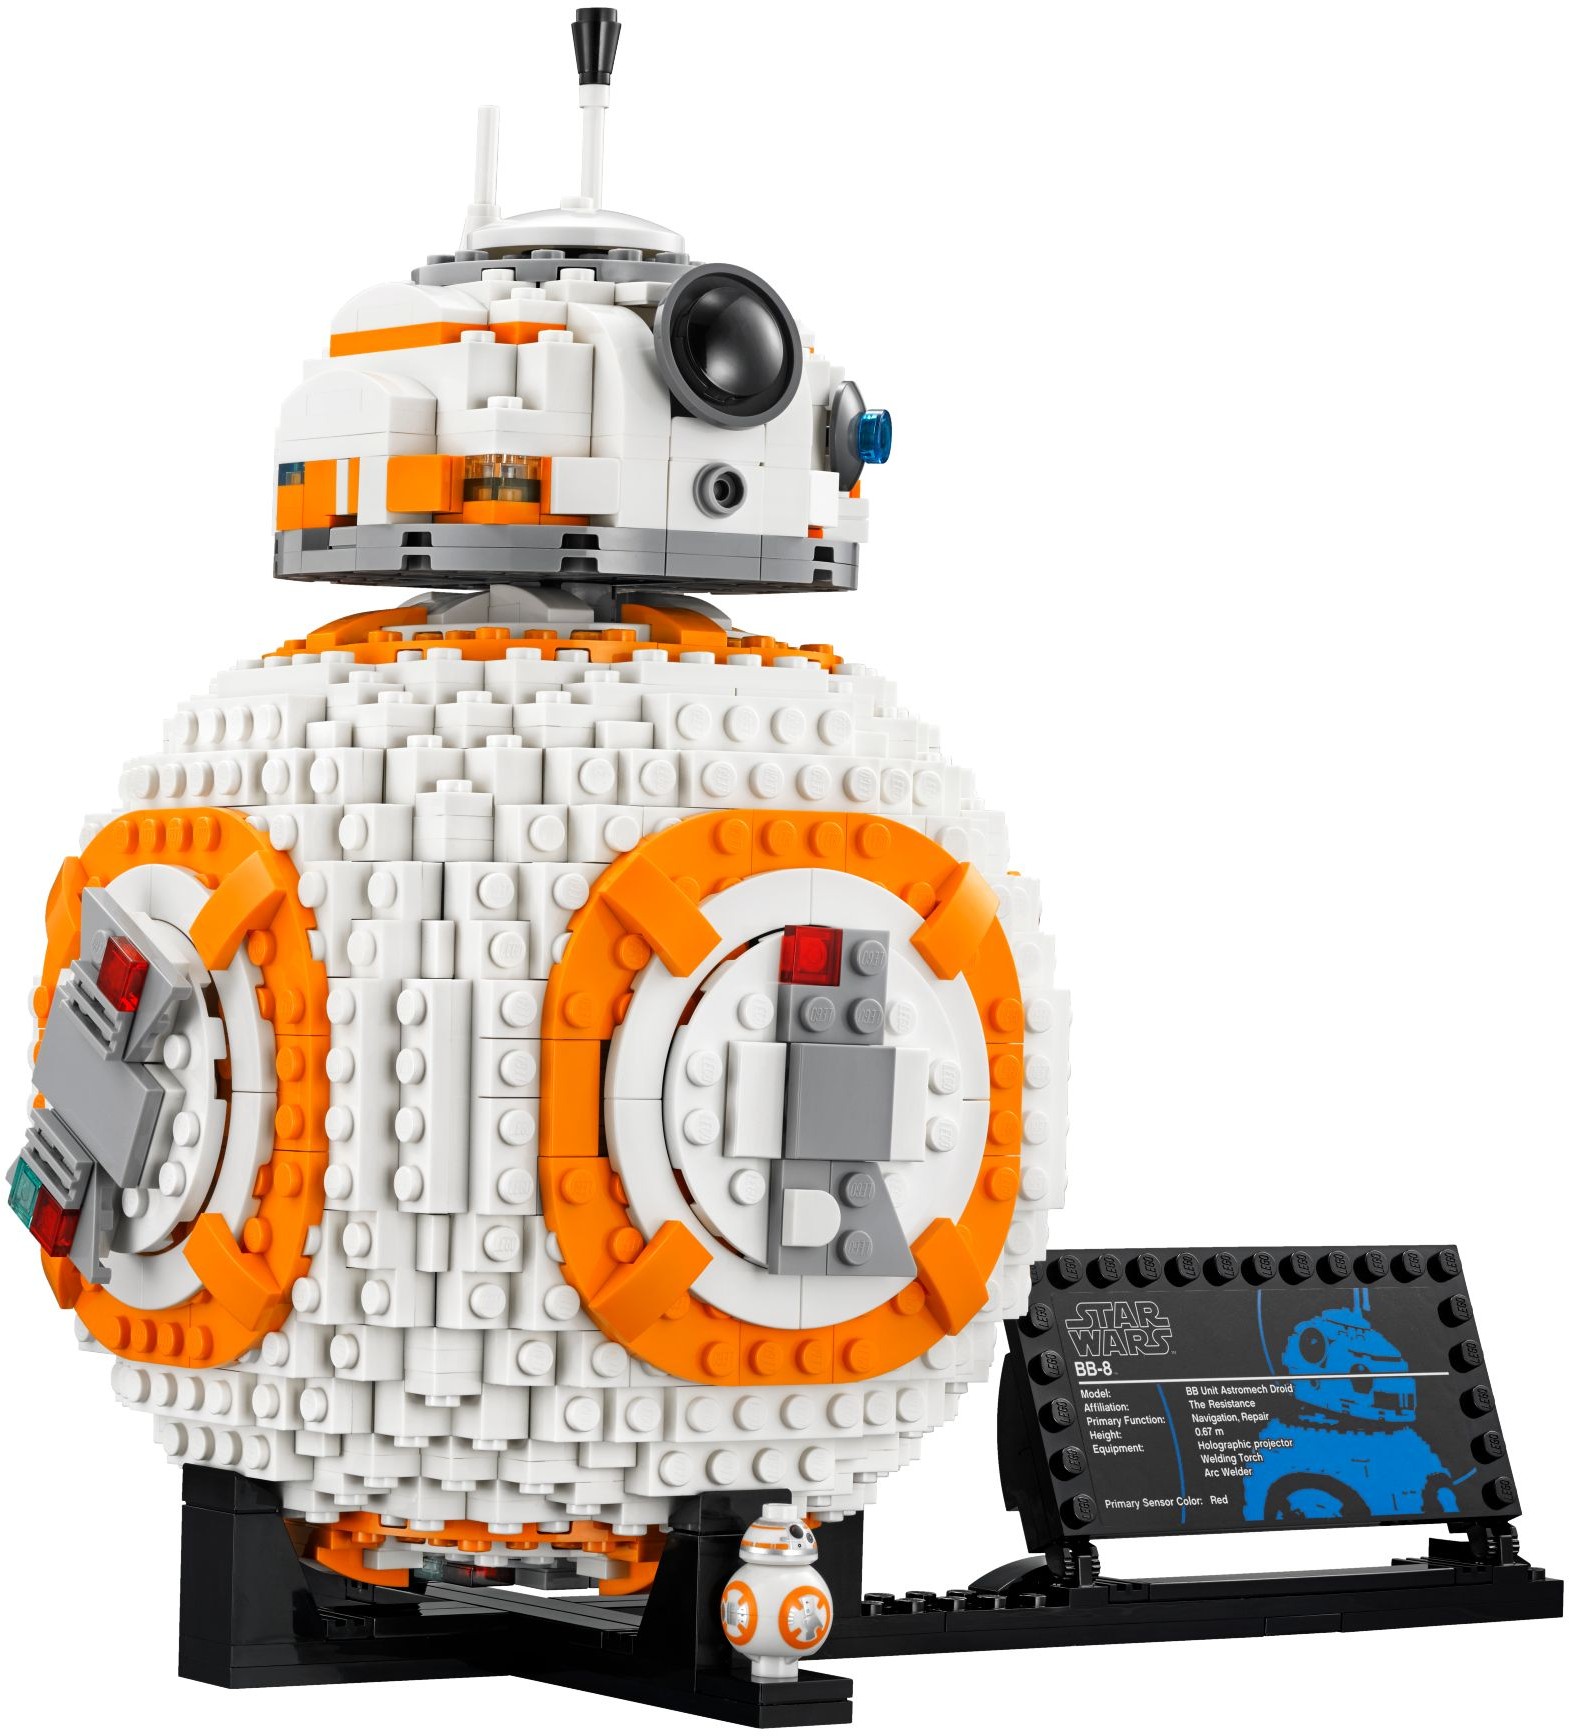 Lego BB-8 - Lego Wars set for sale